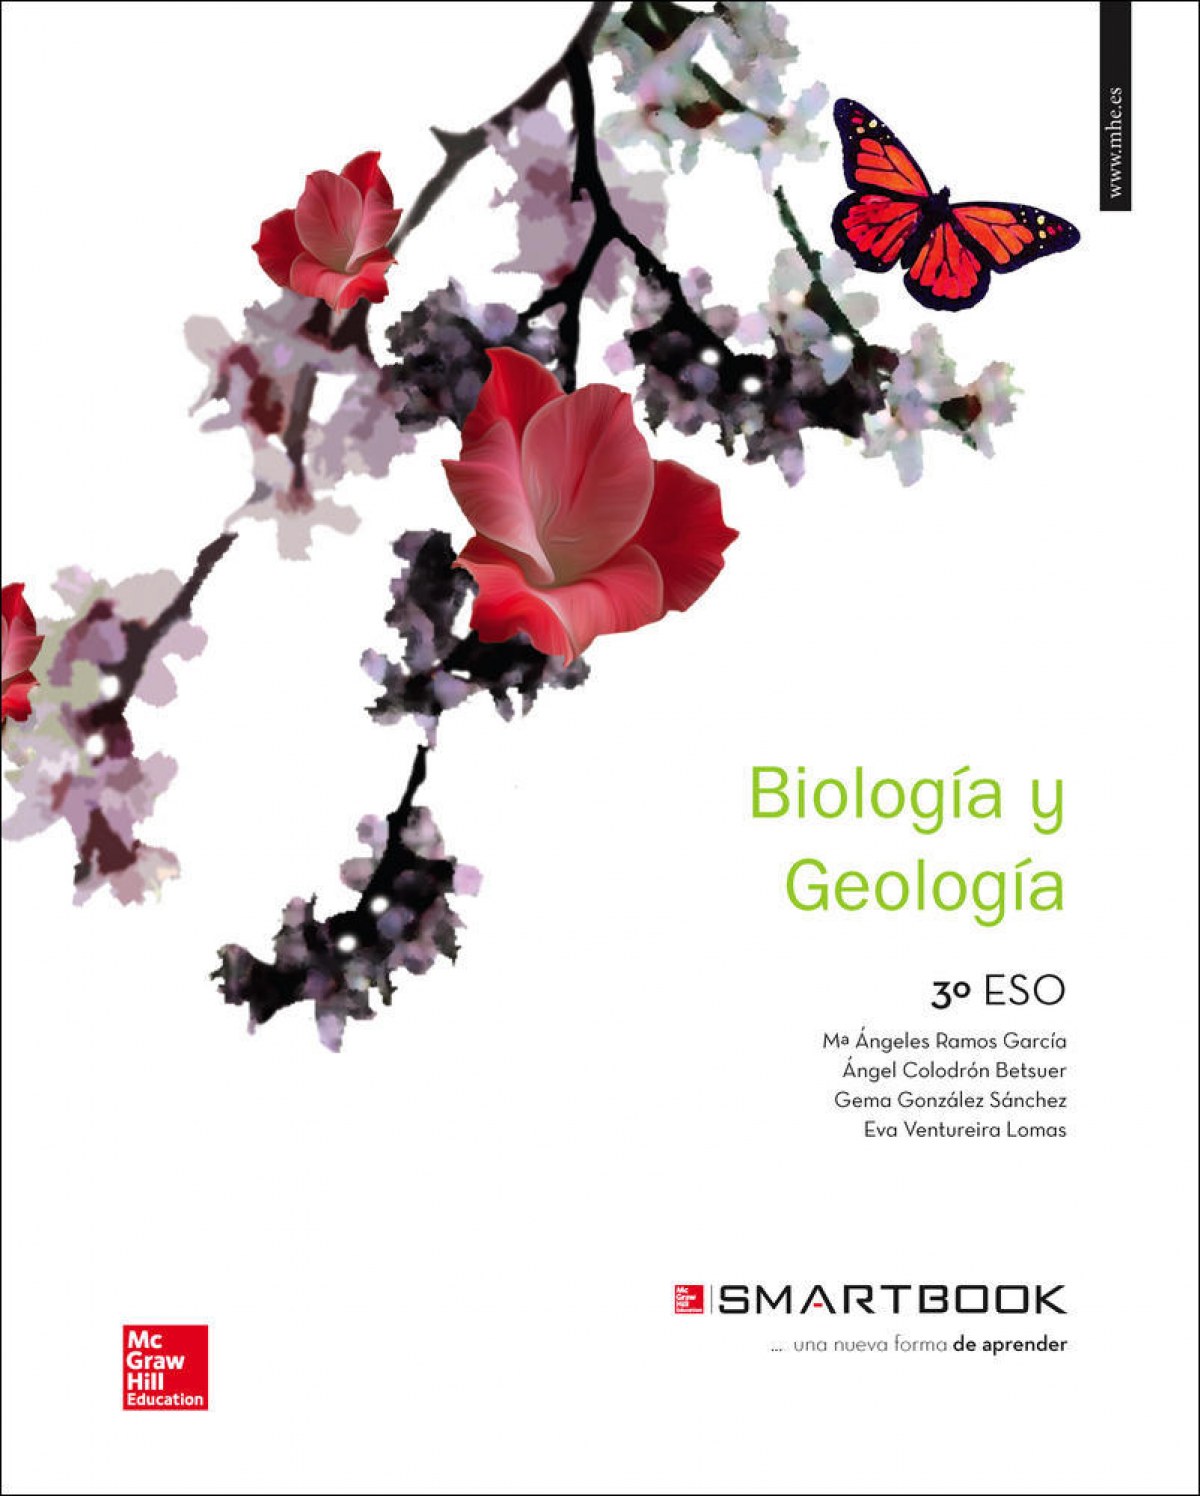 Biologia geologia 3ºeso  +smartbook - Ramos Garcia, MªAngeles